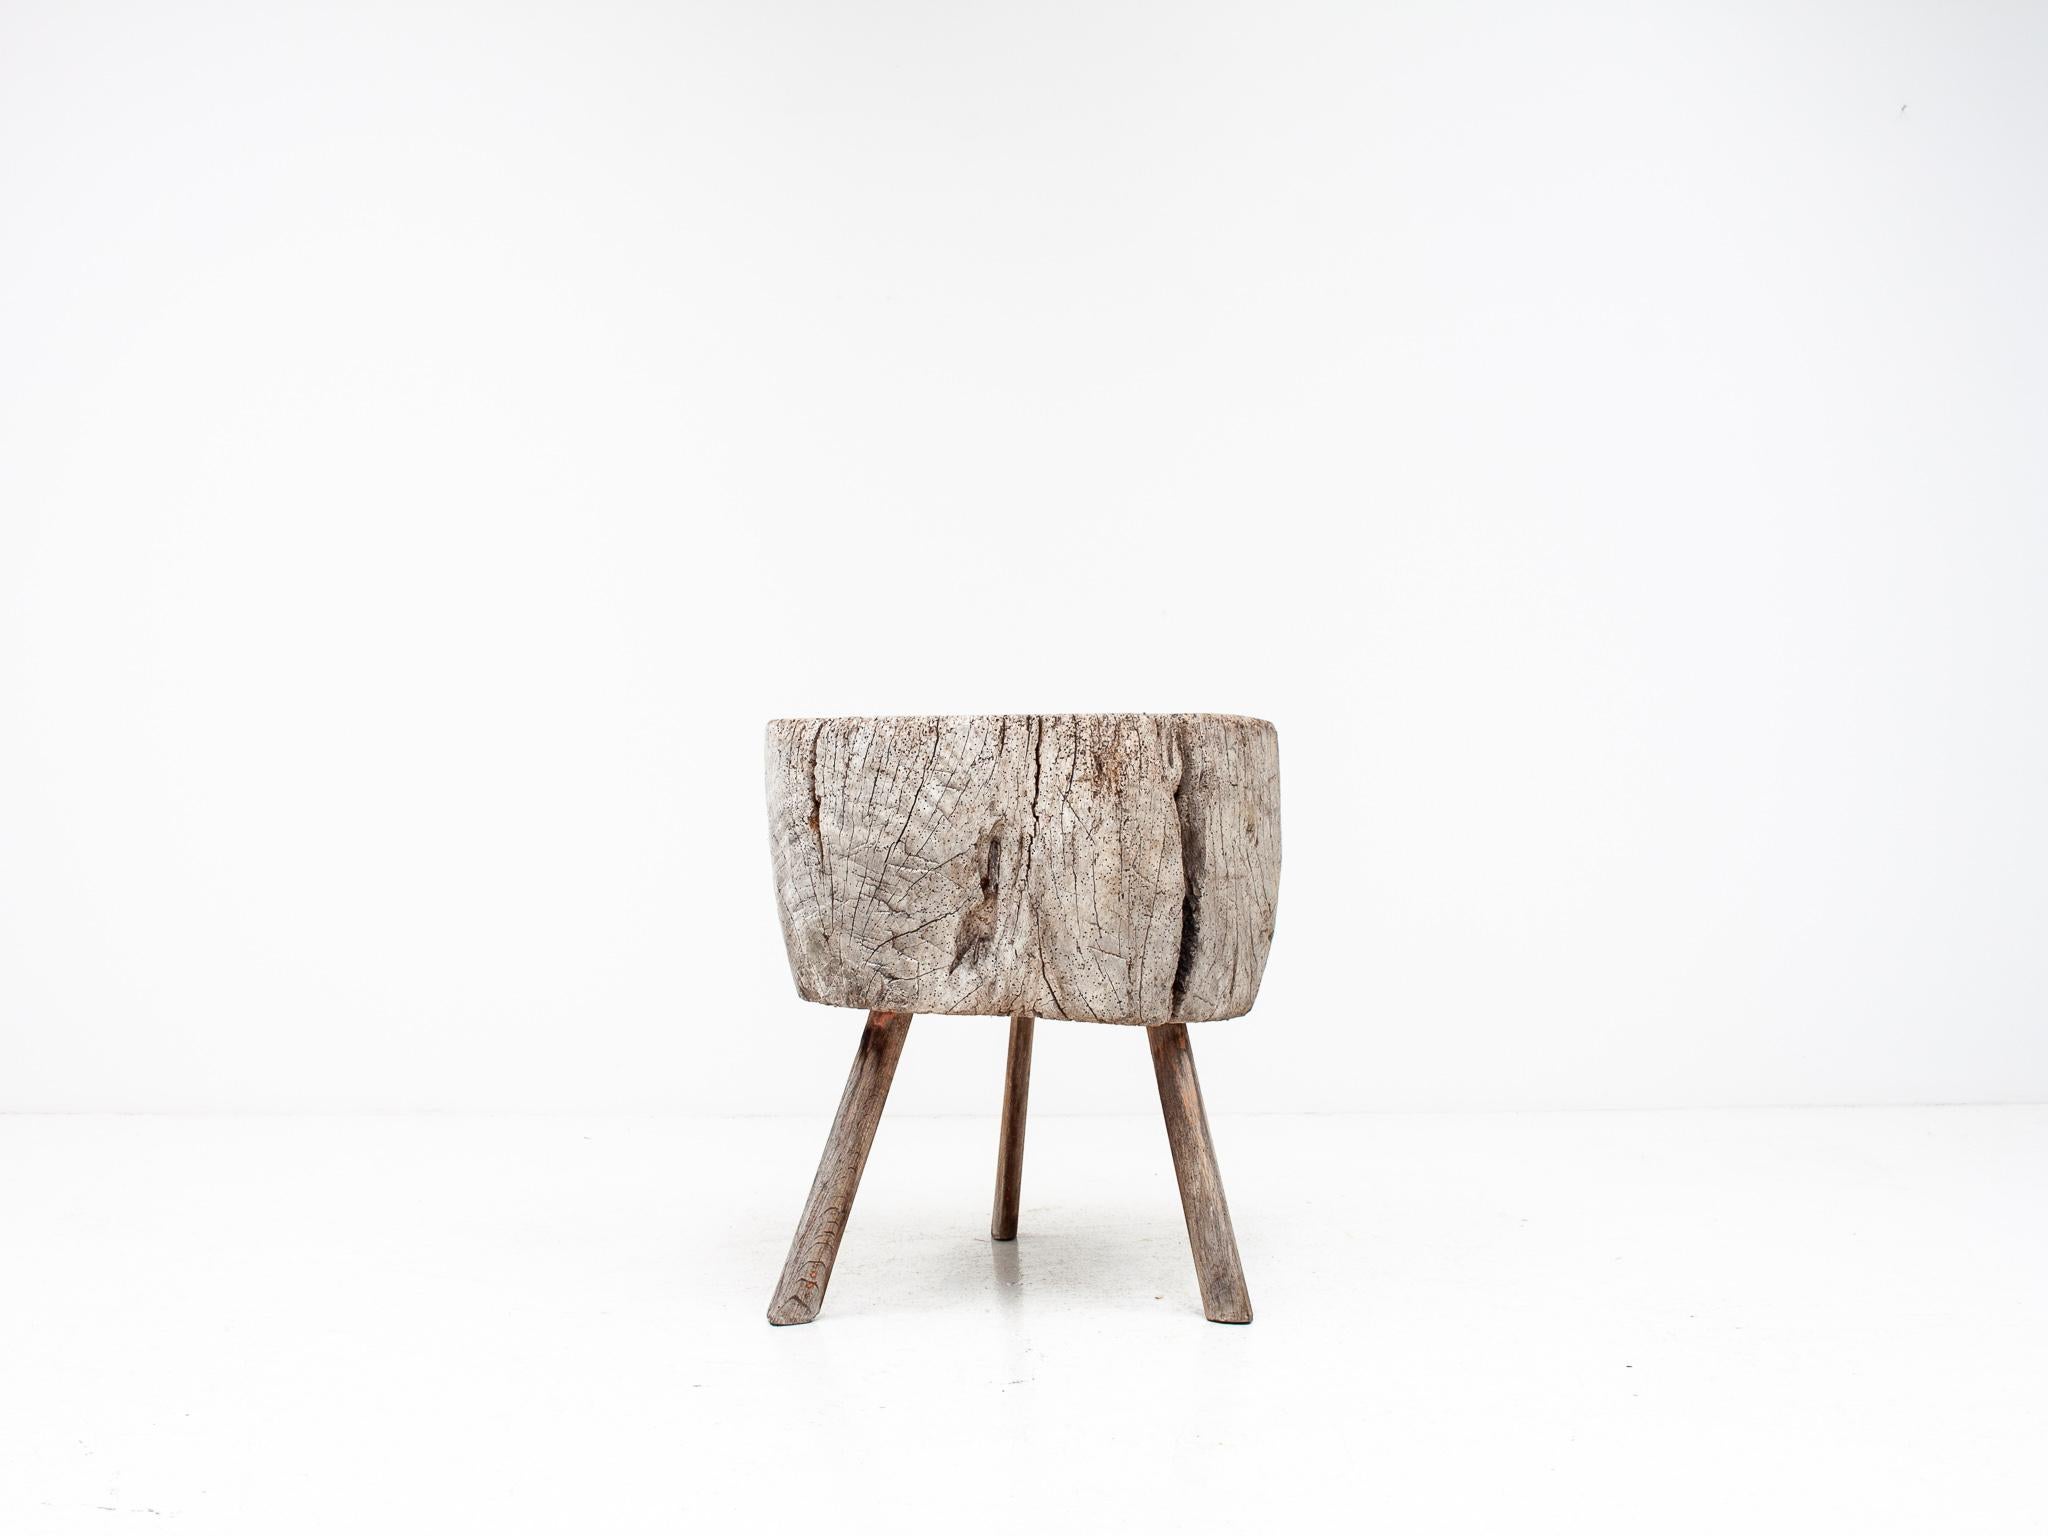 British c19th Century Rustic Oak Chopping Block Table/Console On Three Legs, England. For Sale